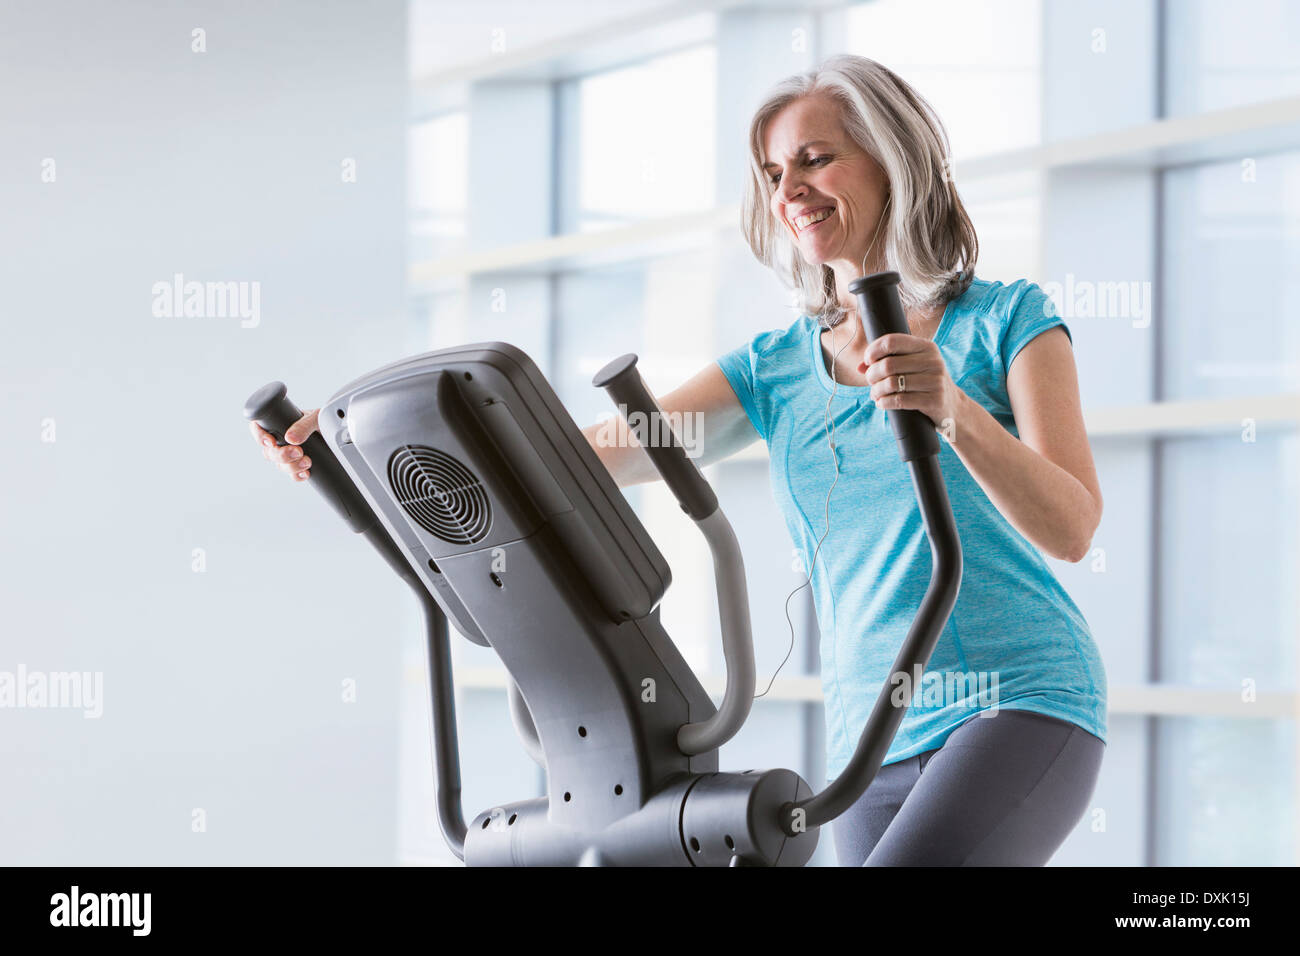 Happy Caucasian woman on elliptical trainer at gym Banque D'Images